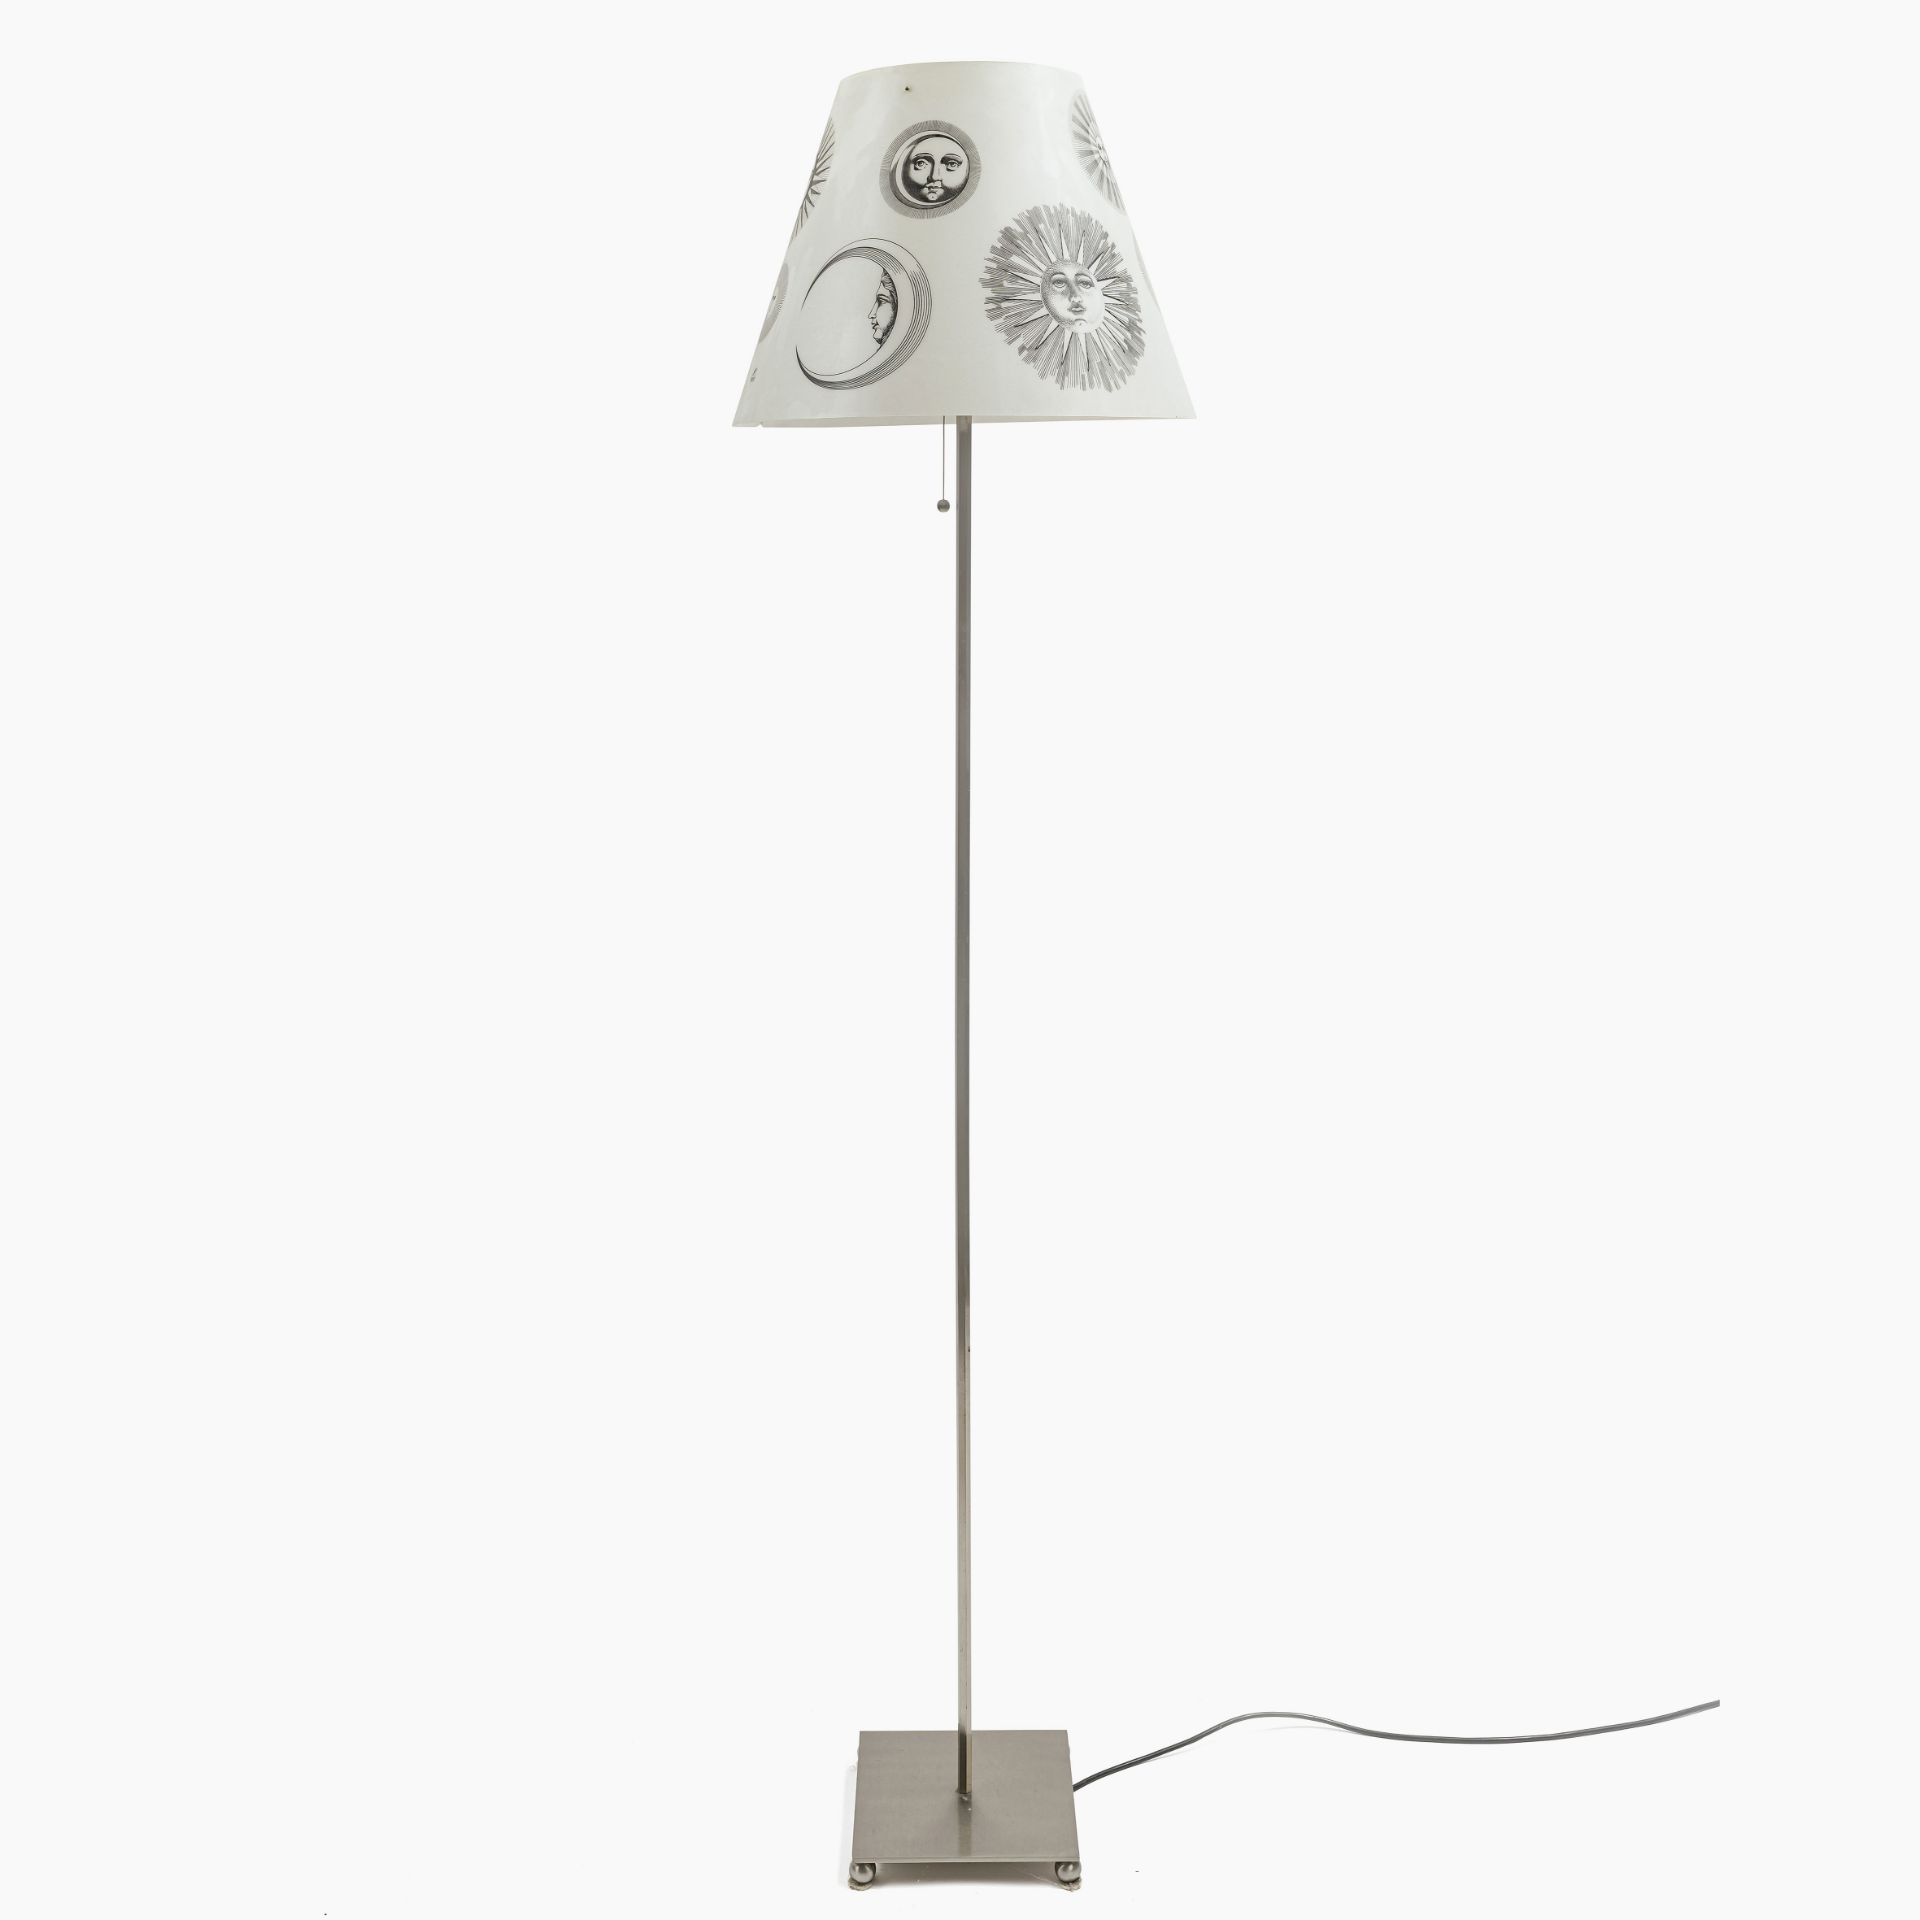 A standard lamp - Piero Fornasetti, Milan, 1990s